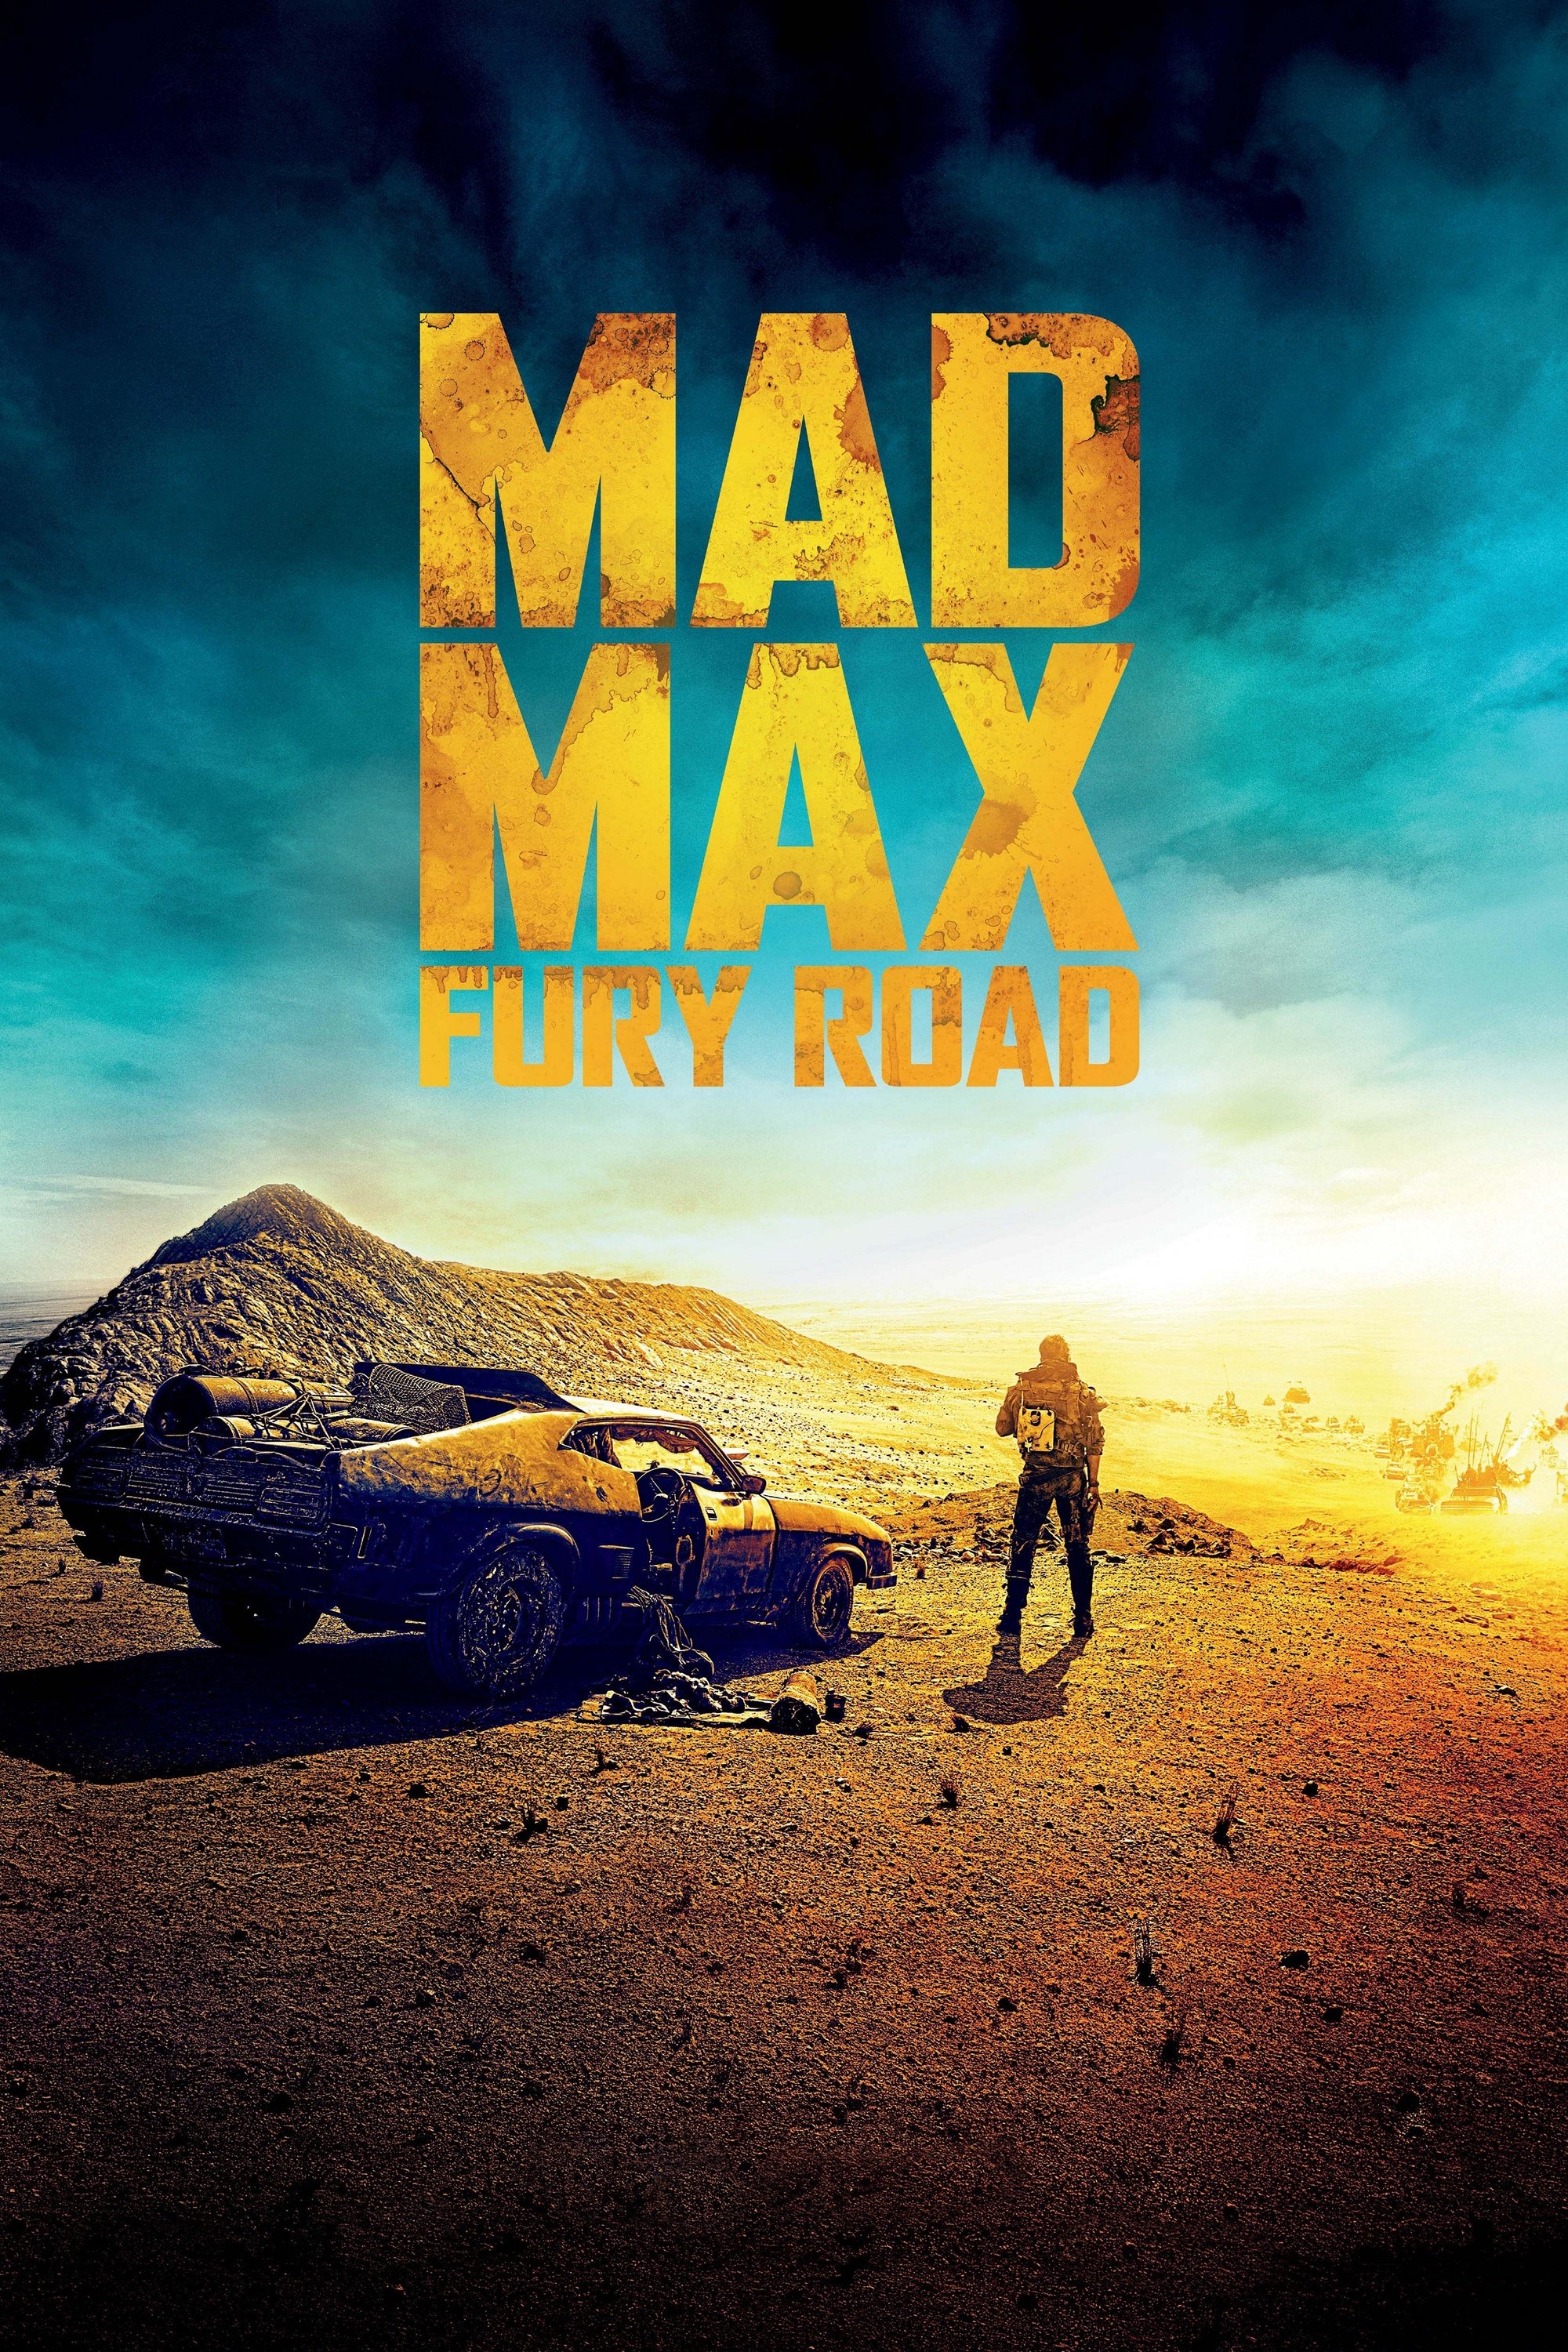 MAD MAX FURY ROAD